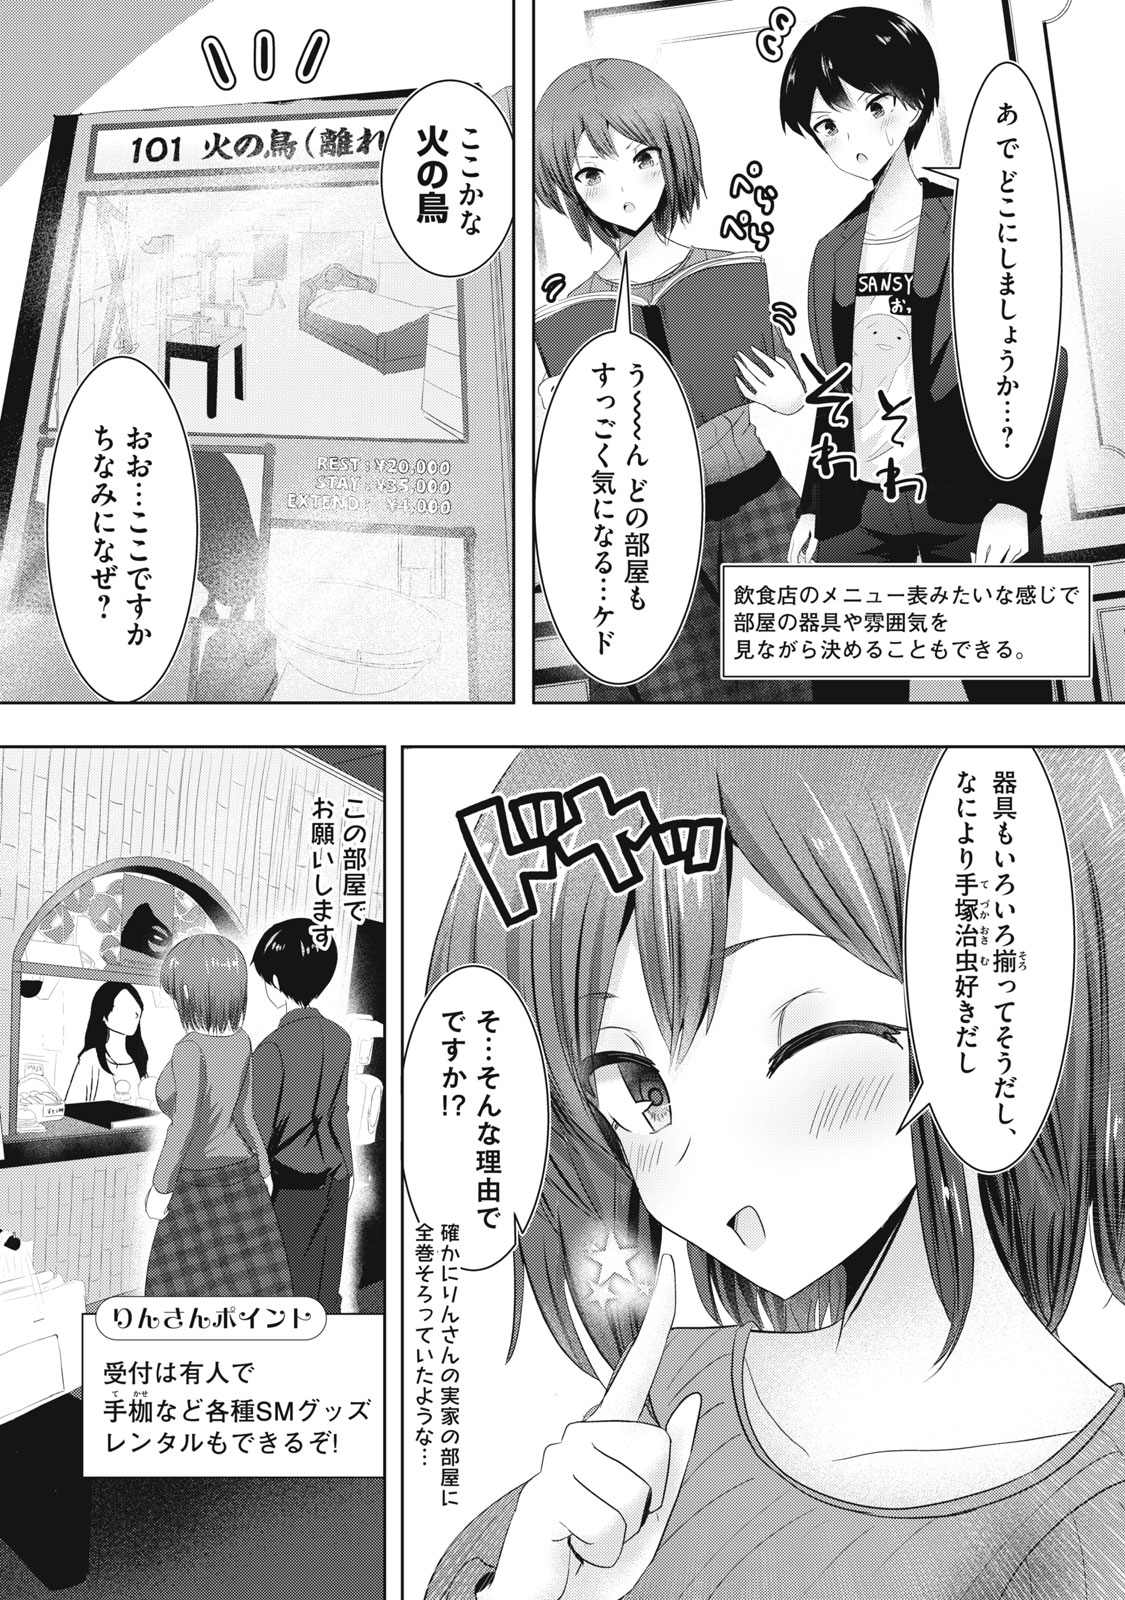 Abnorlove – Fuufu de Abnormal Love Shimasen ka? - Chapter 3 - Page 2